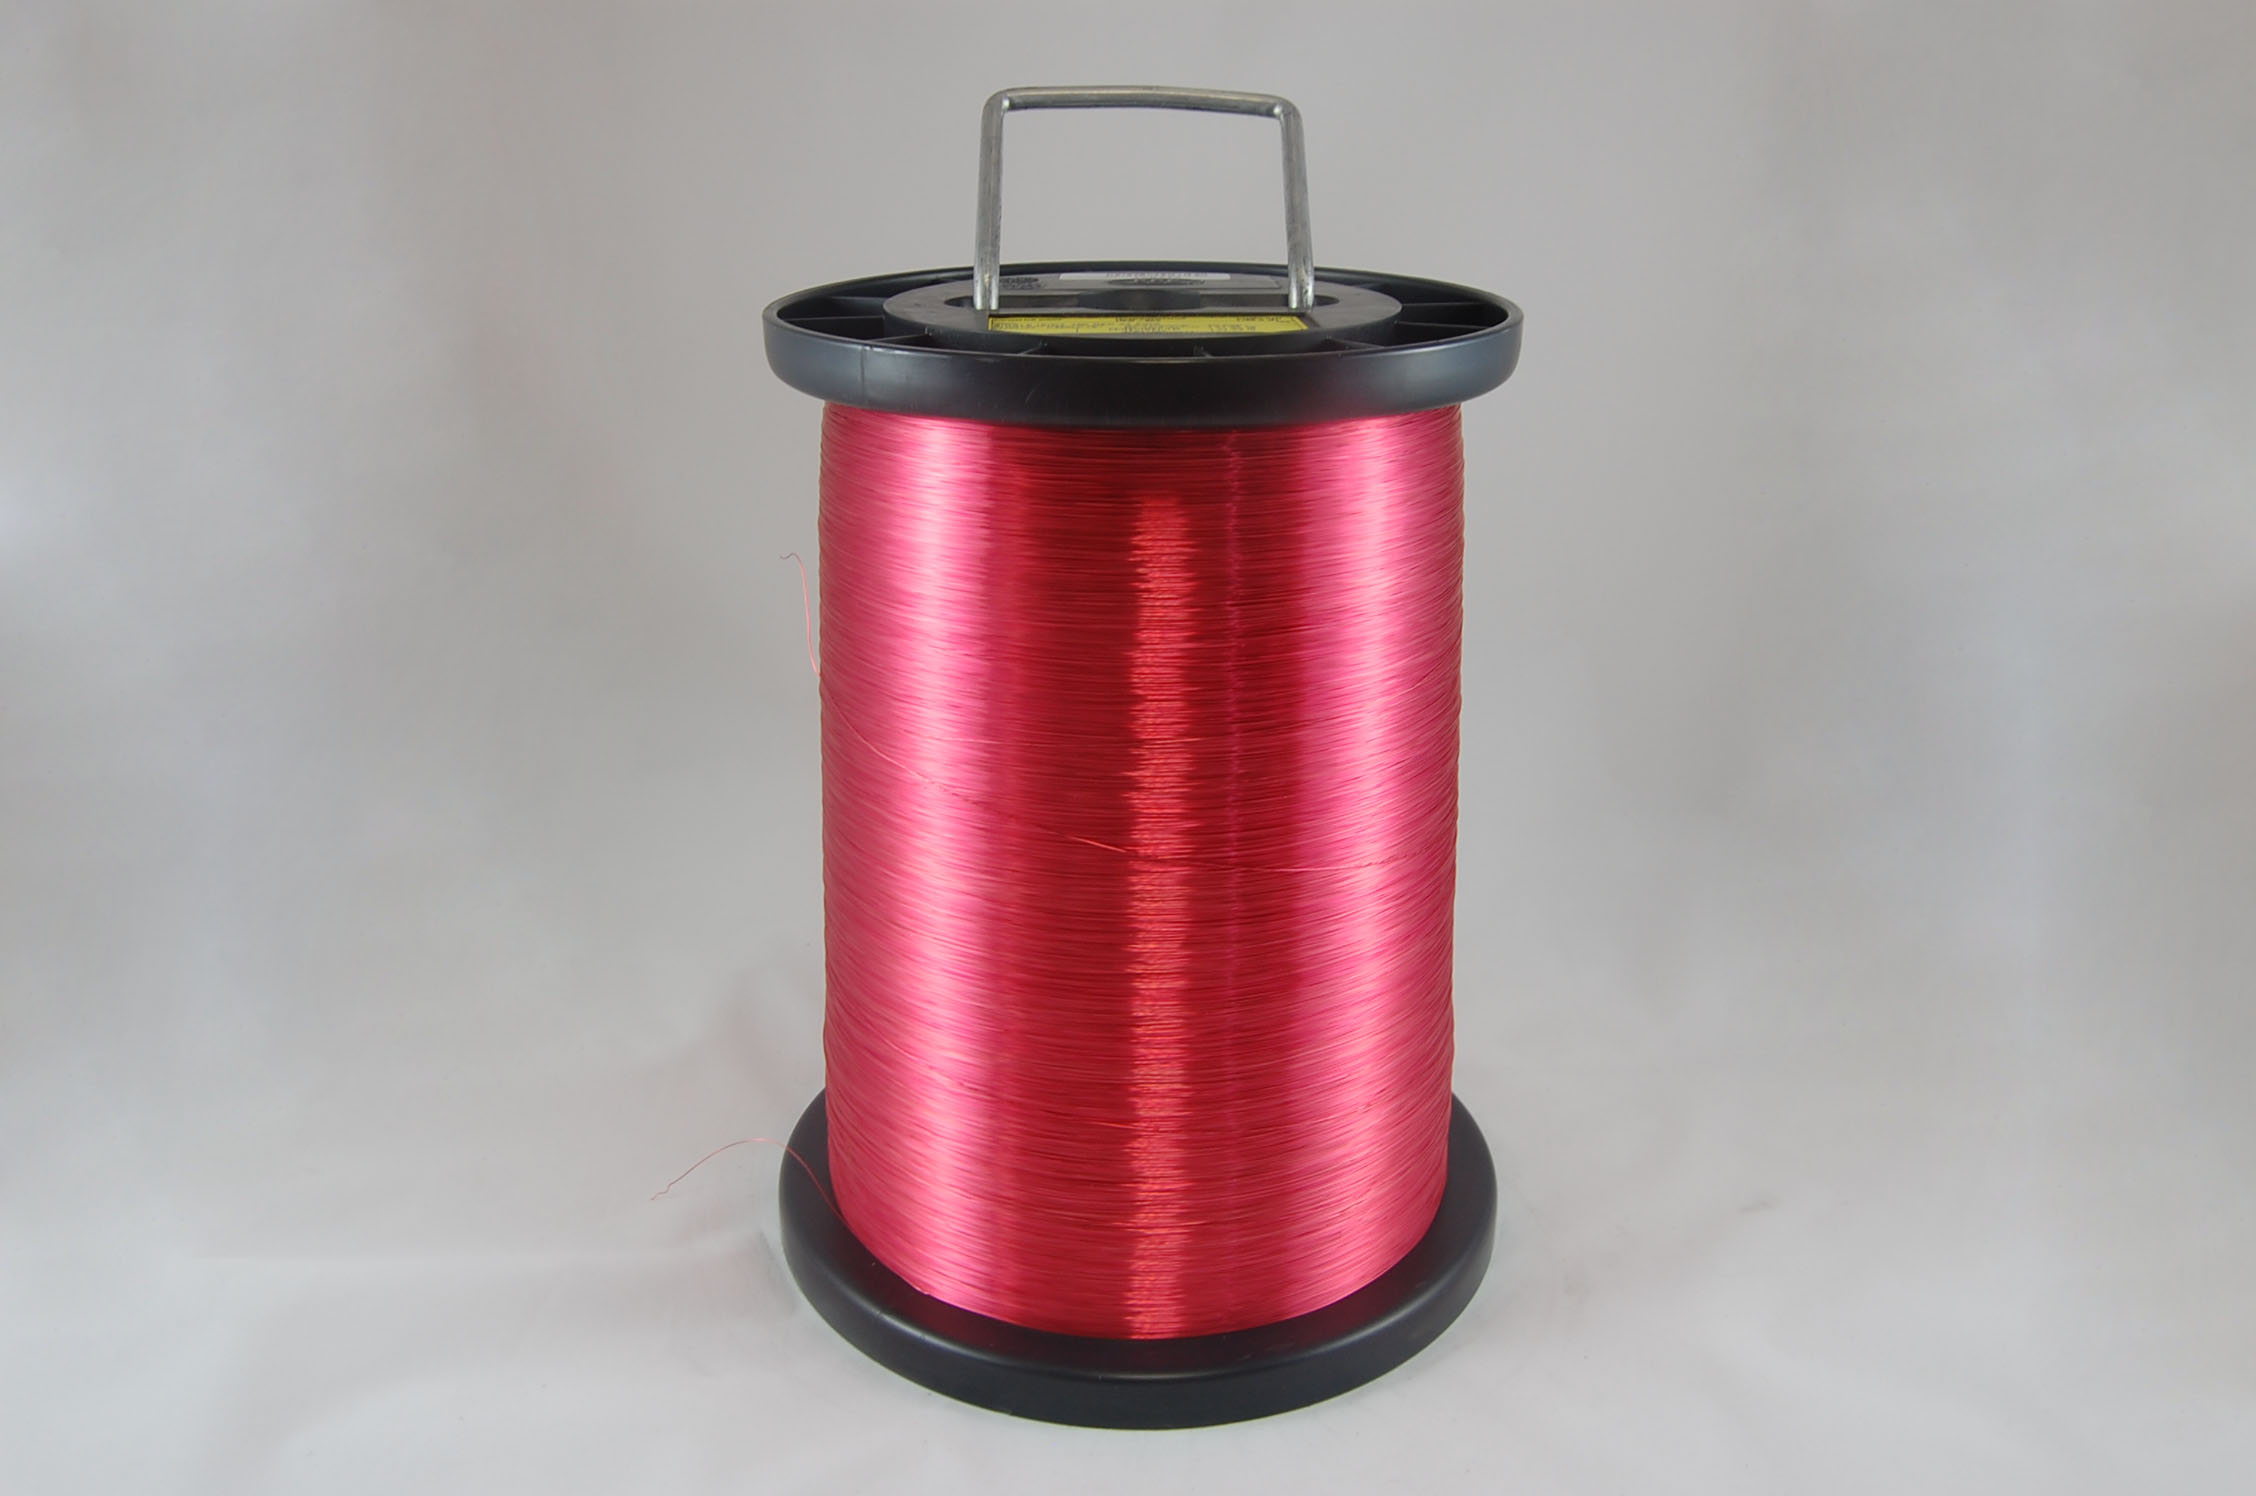 #17 Heavy INVEMID 200 Round MW 35 Copper Magnet Wire 200°C, copper, 45 LB half pack pail (average wght.)